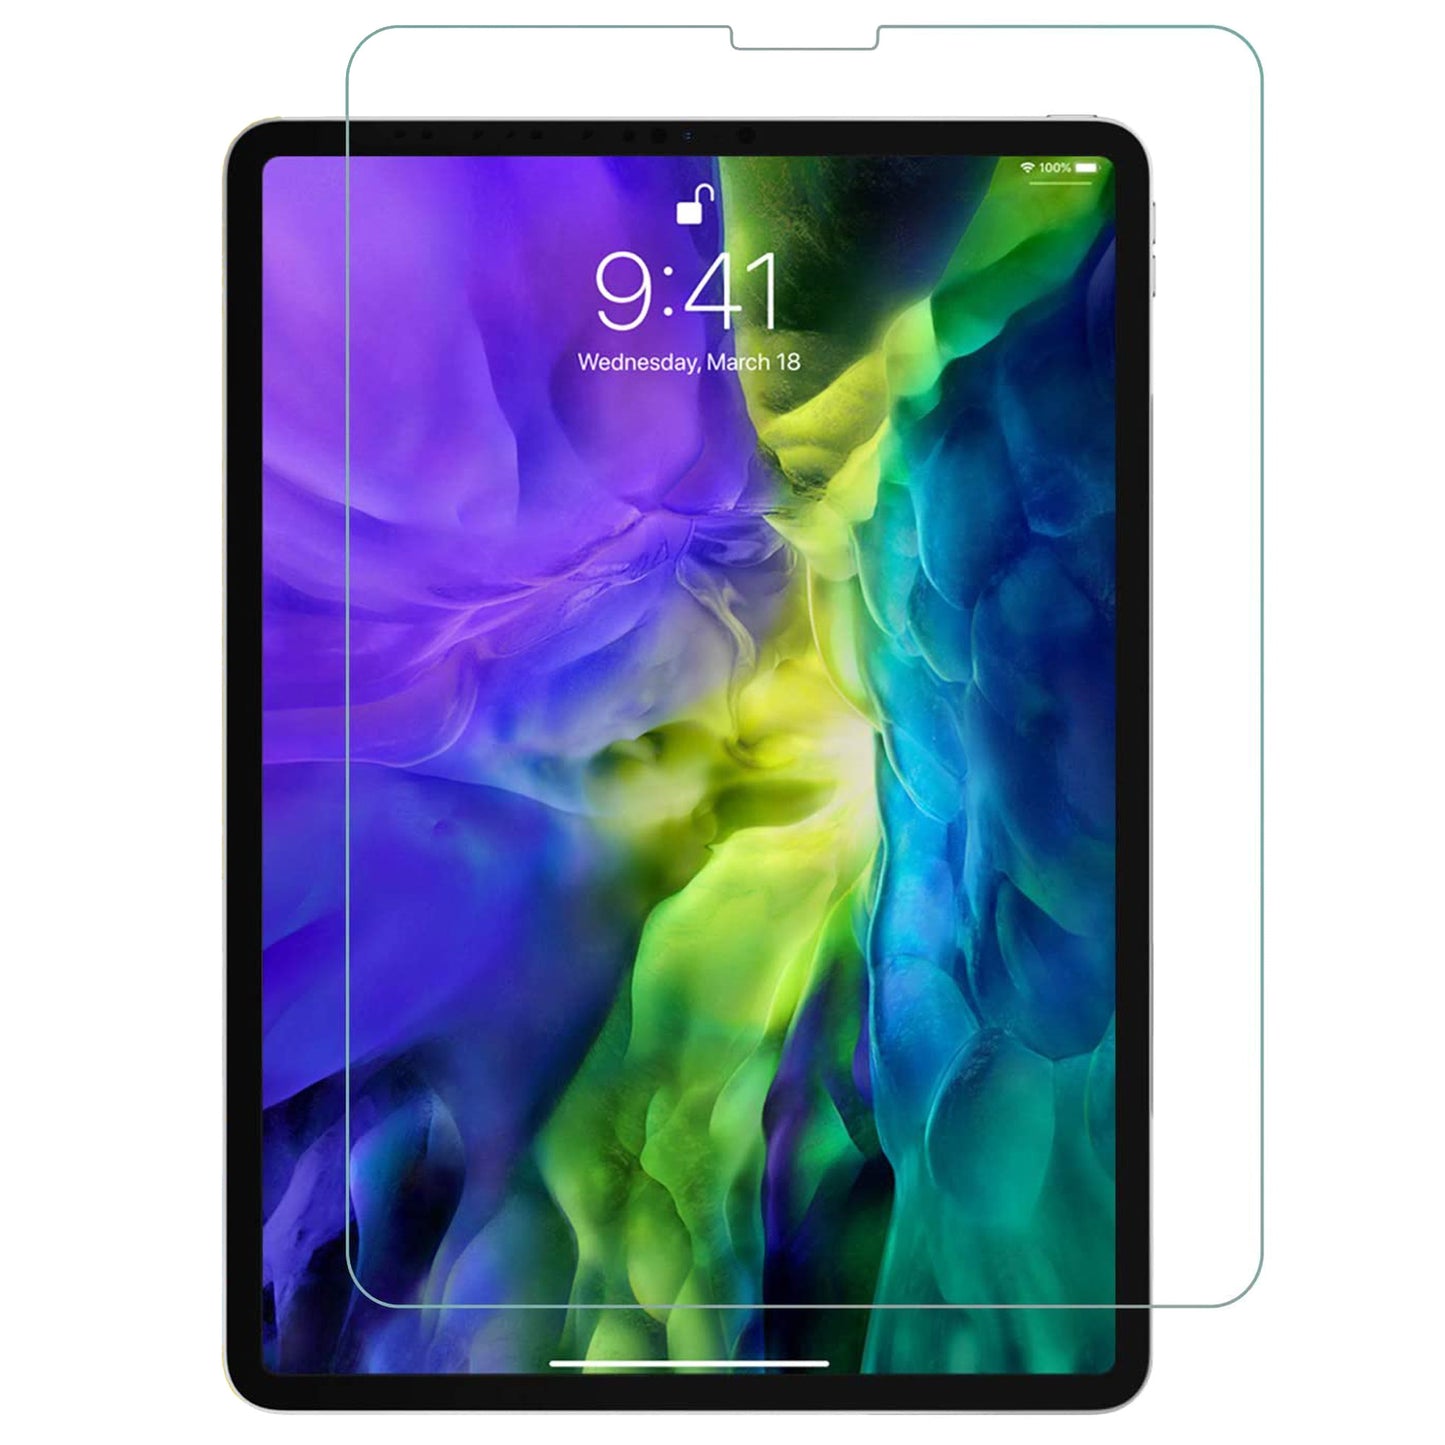 [3 Pack] MEZON Apple iPad Pro 11" 2020 Anti-Glare Matte Film Case and Pencil Friendly Screen Protector (iPad Pro 11", Matte)